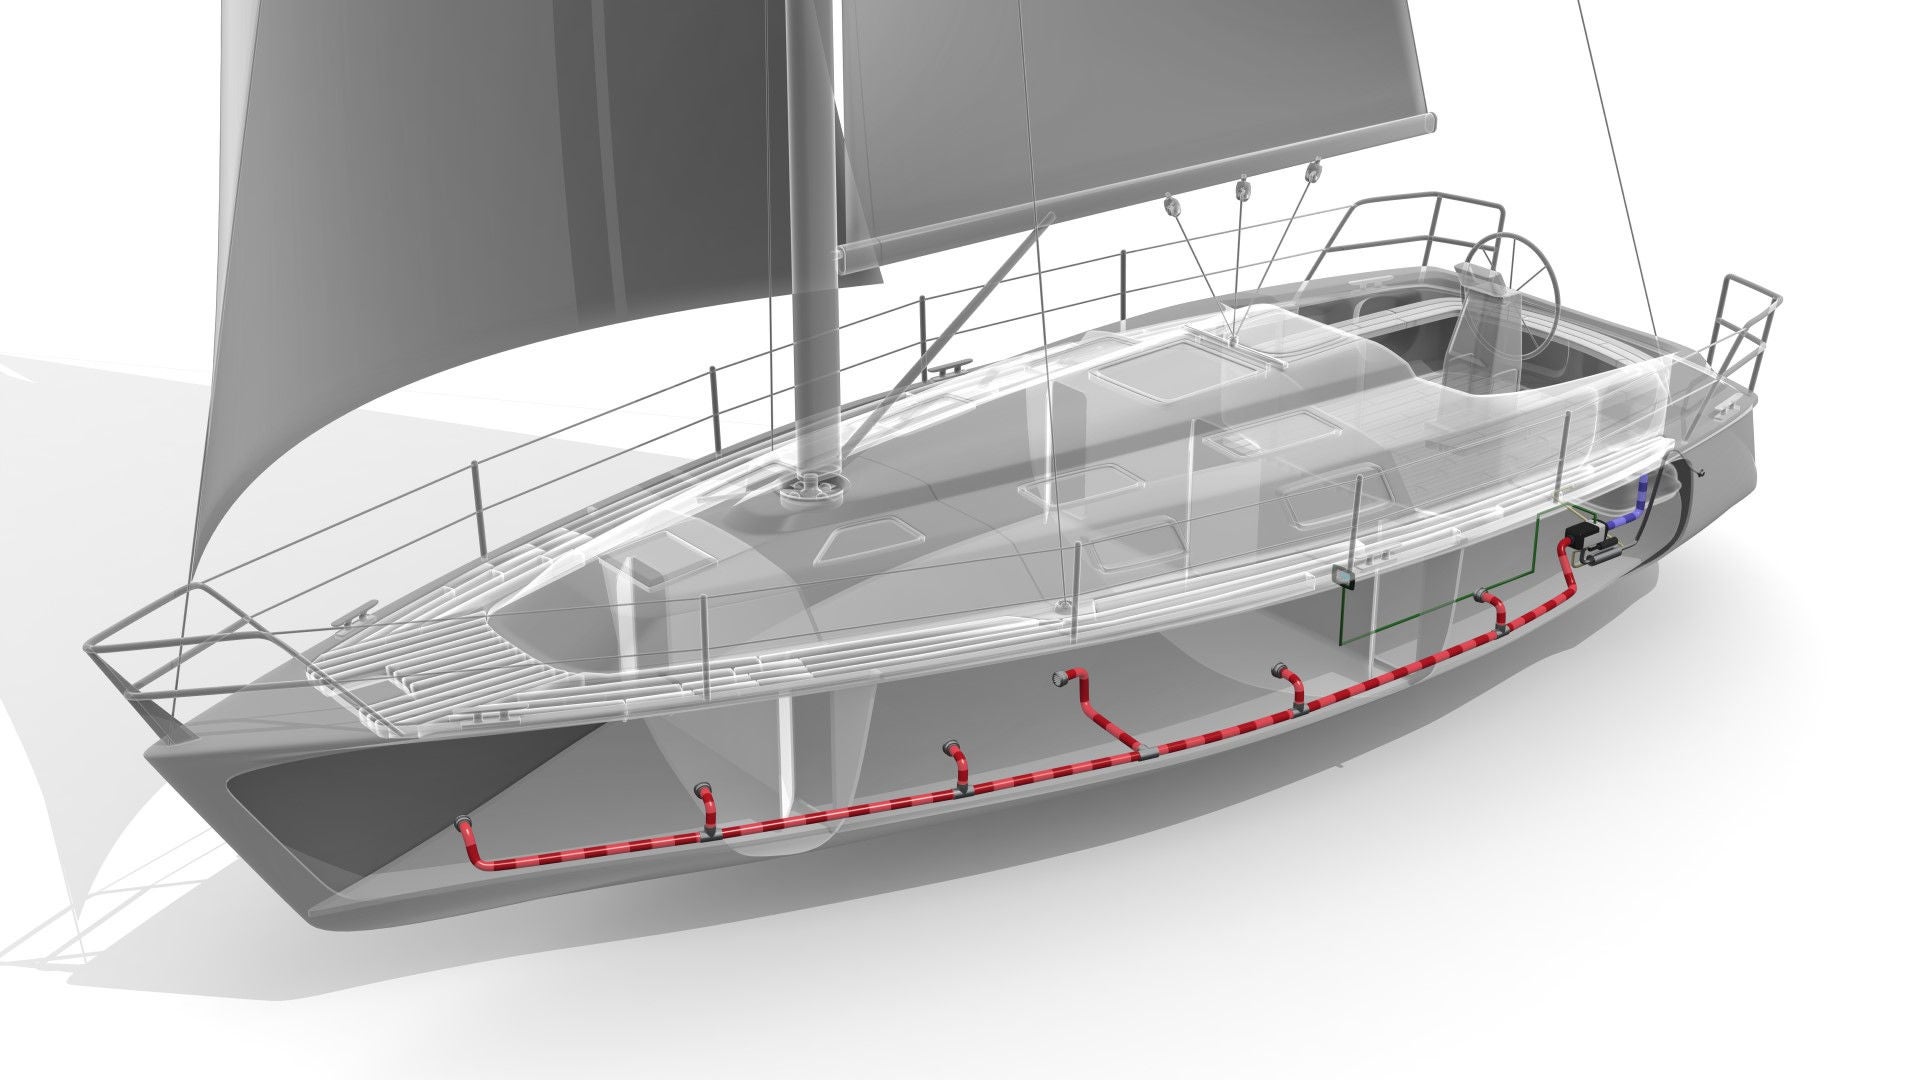 Illustration of Webasto marine air heater in a boat